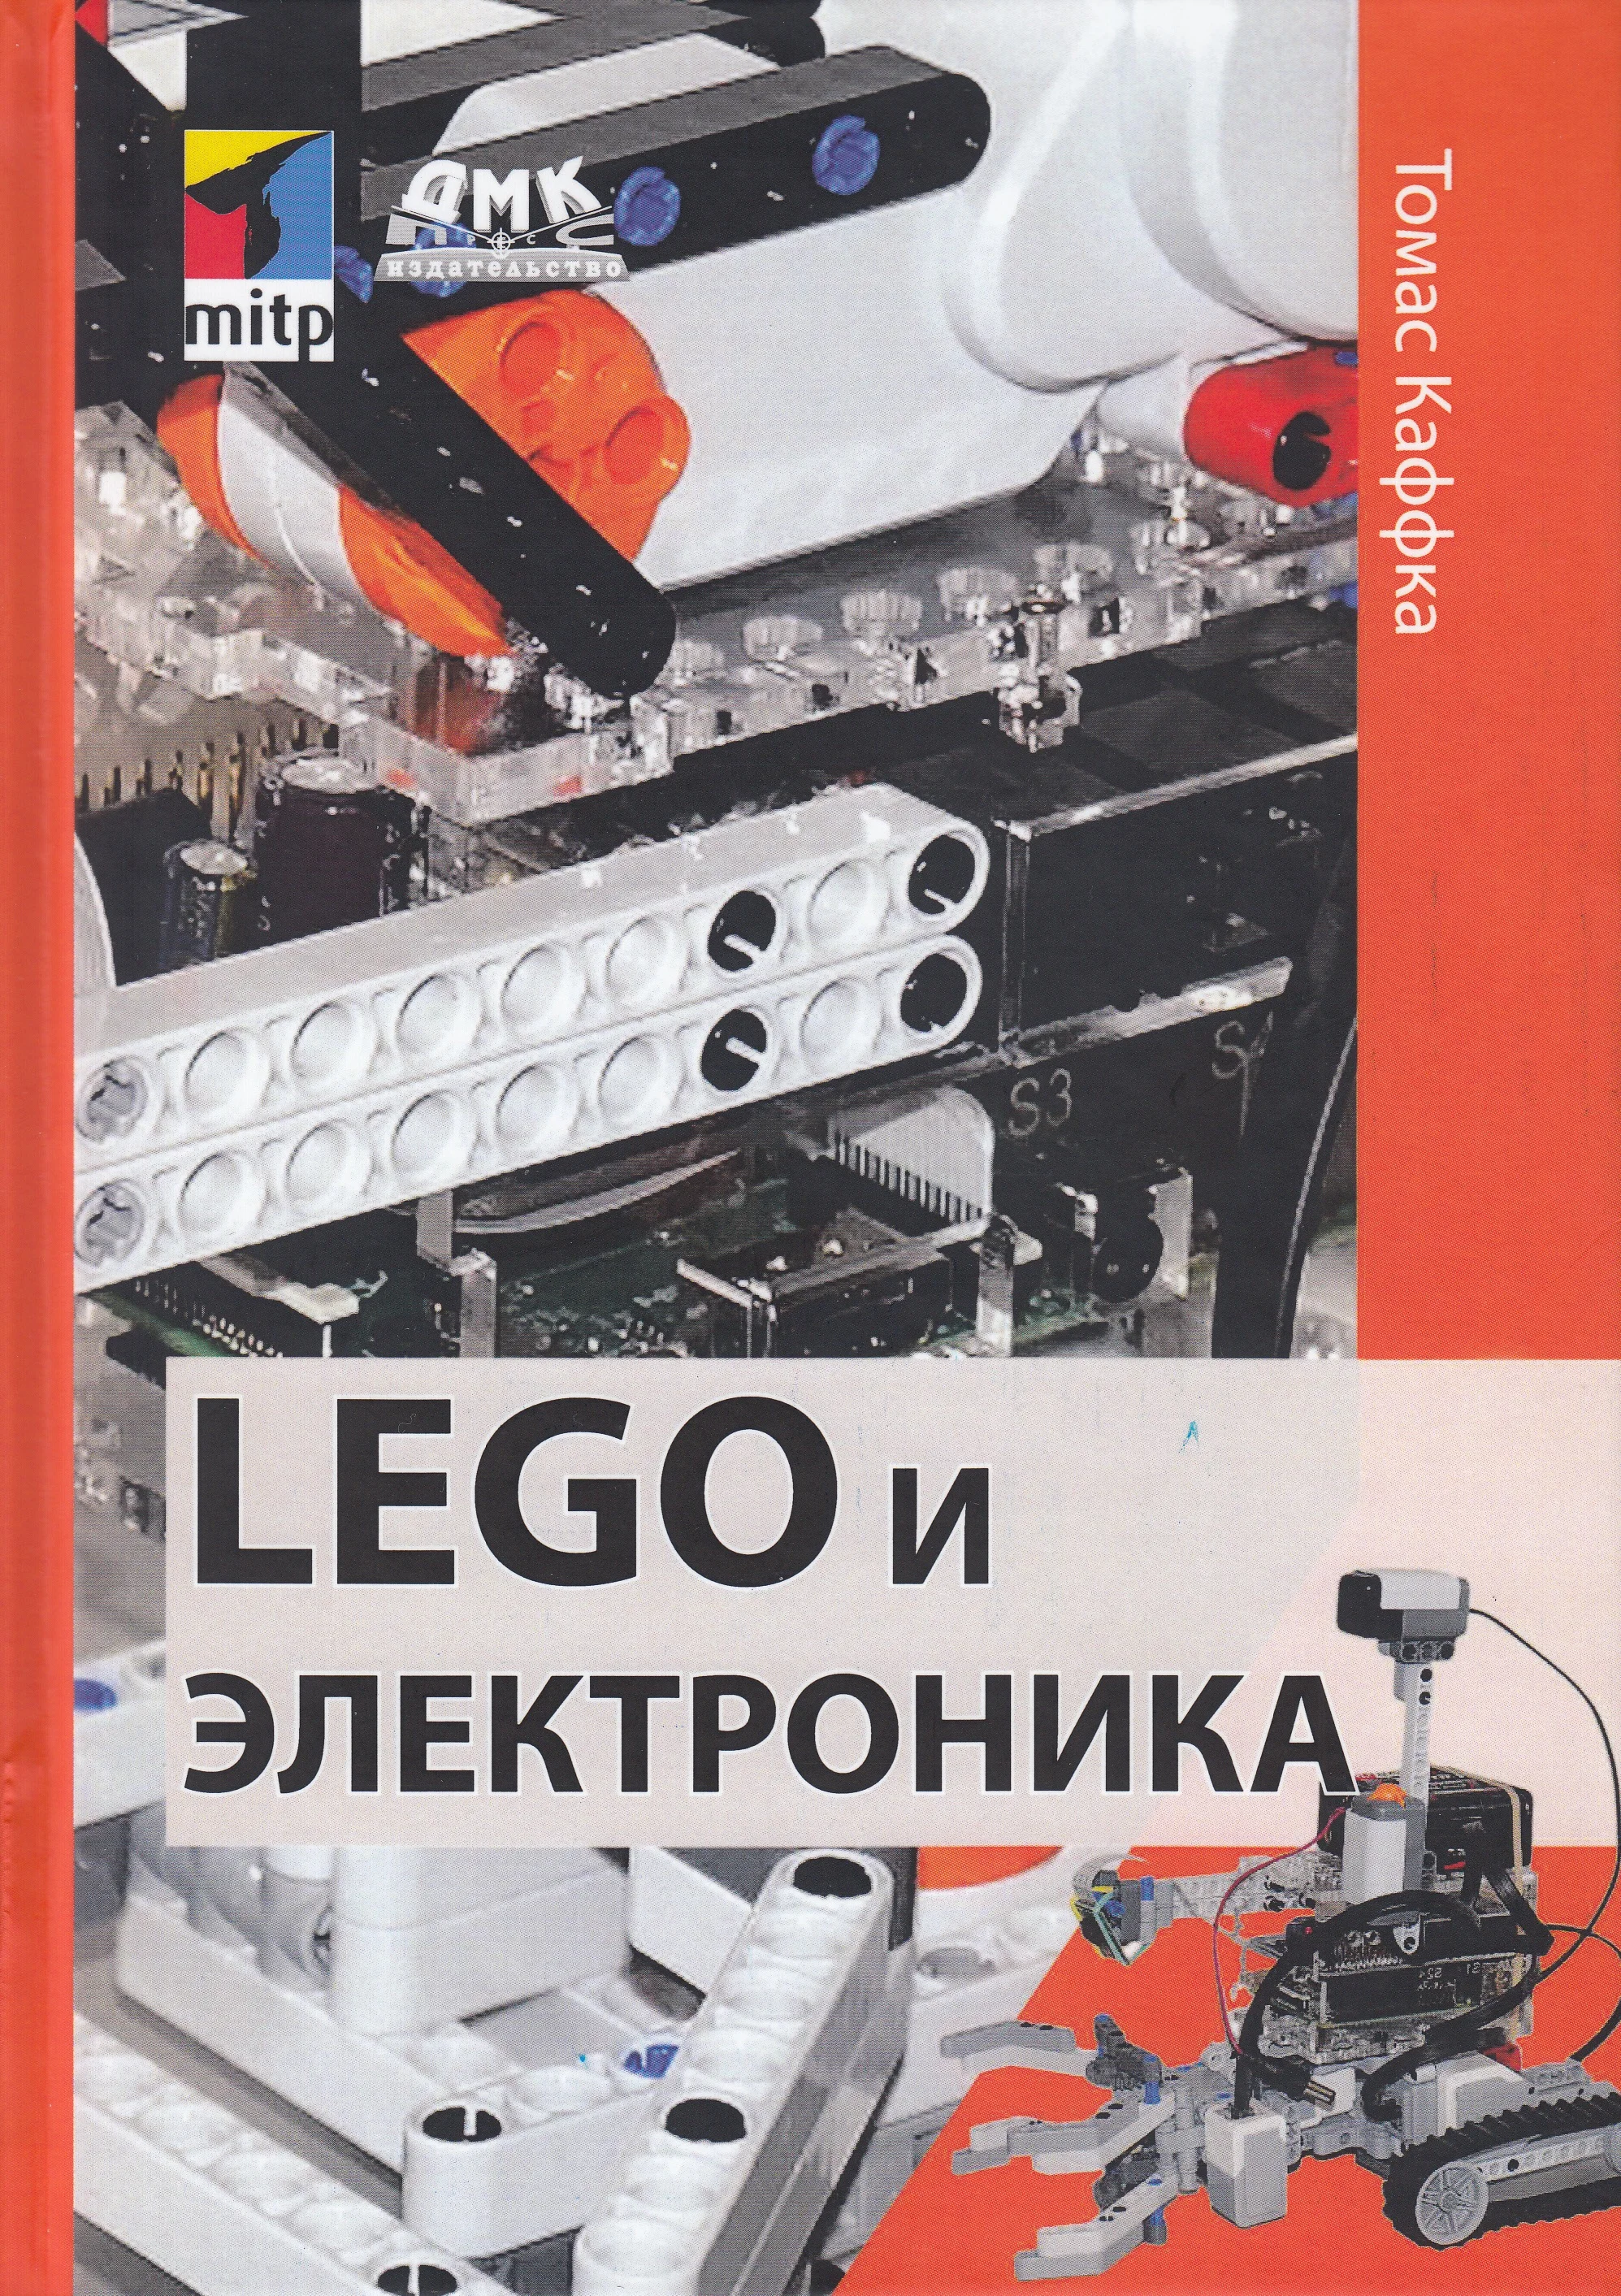 LEGO и электроника | Канцтовары для офиса дома